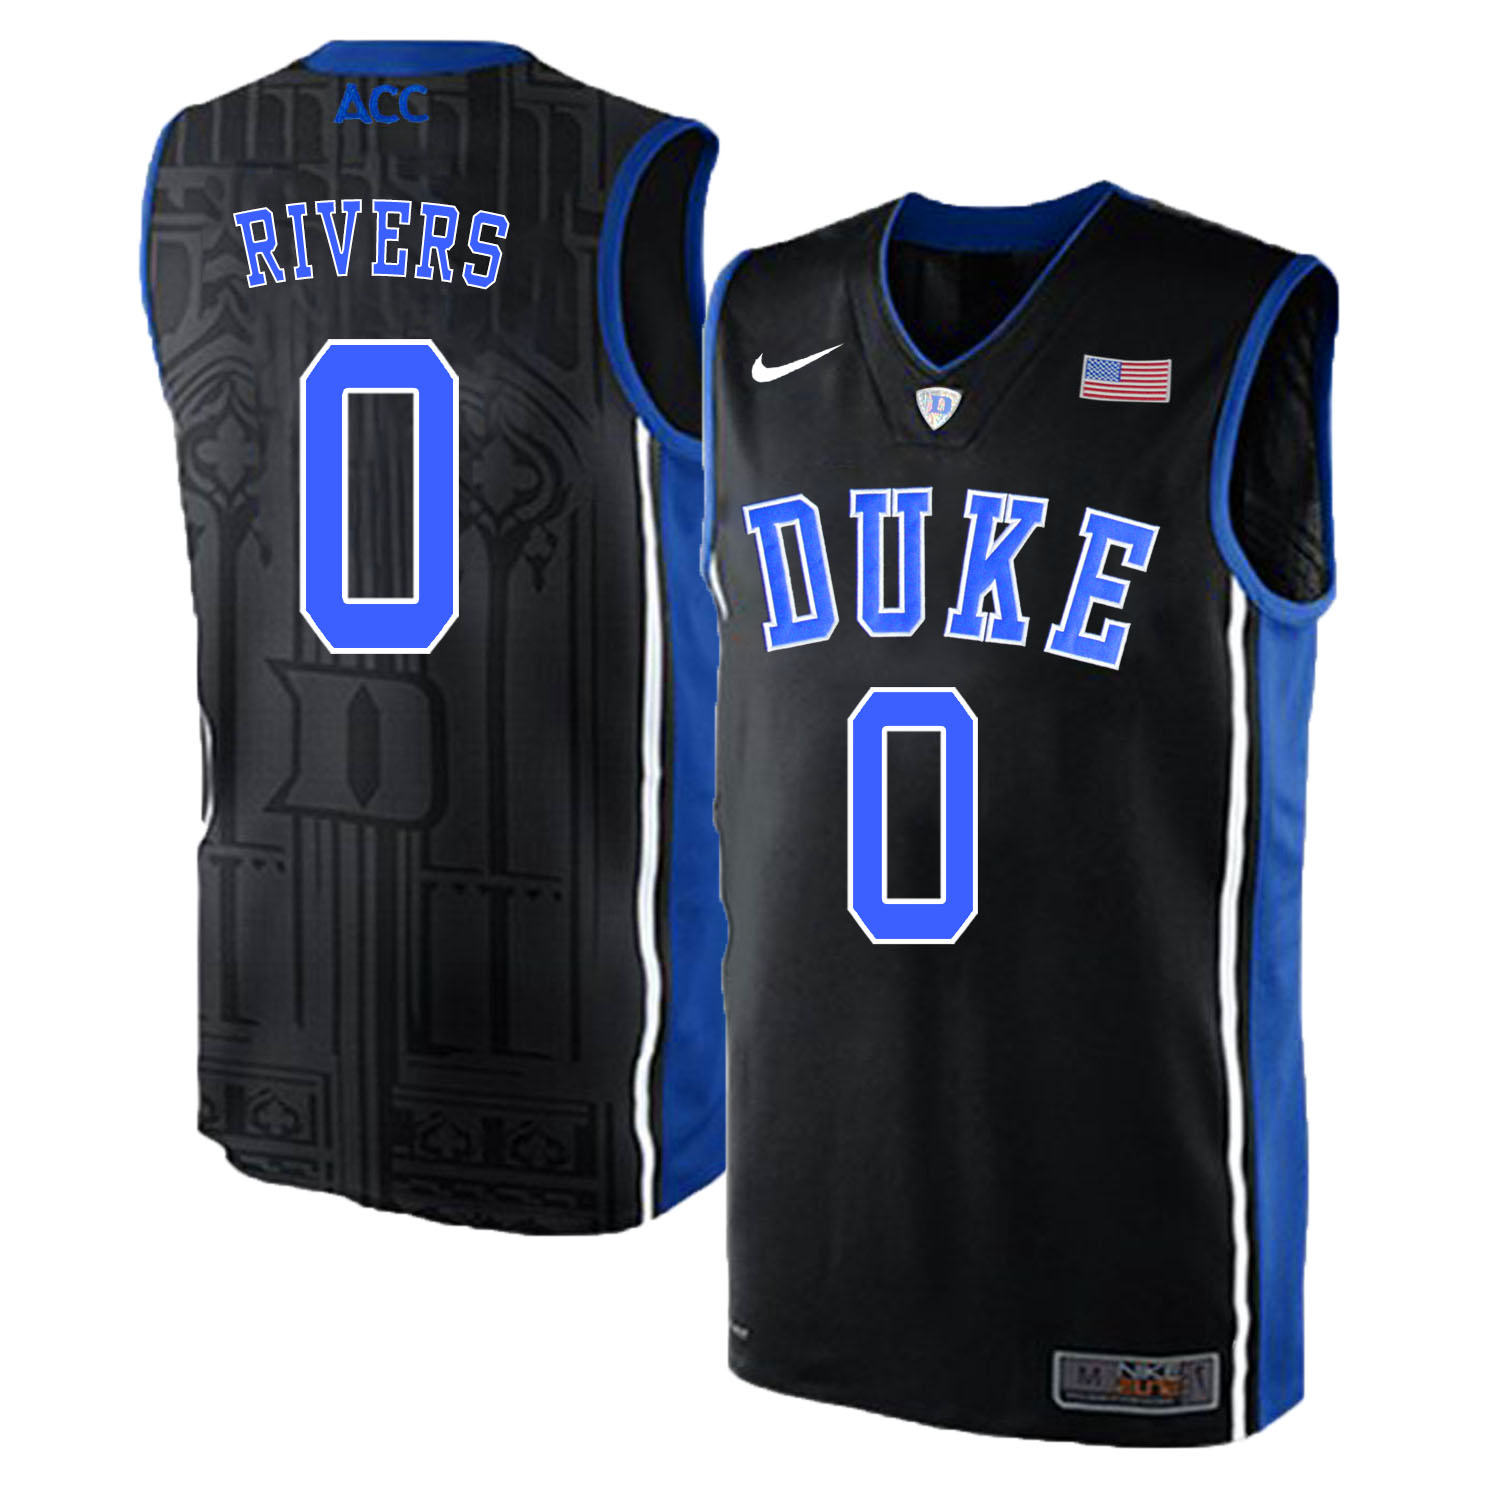 Duke Blue Devils 0 Austin Rivers Black Elite Nike College Basketball Jersey